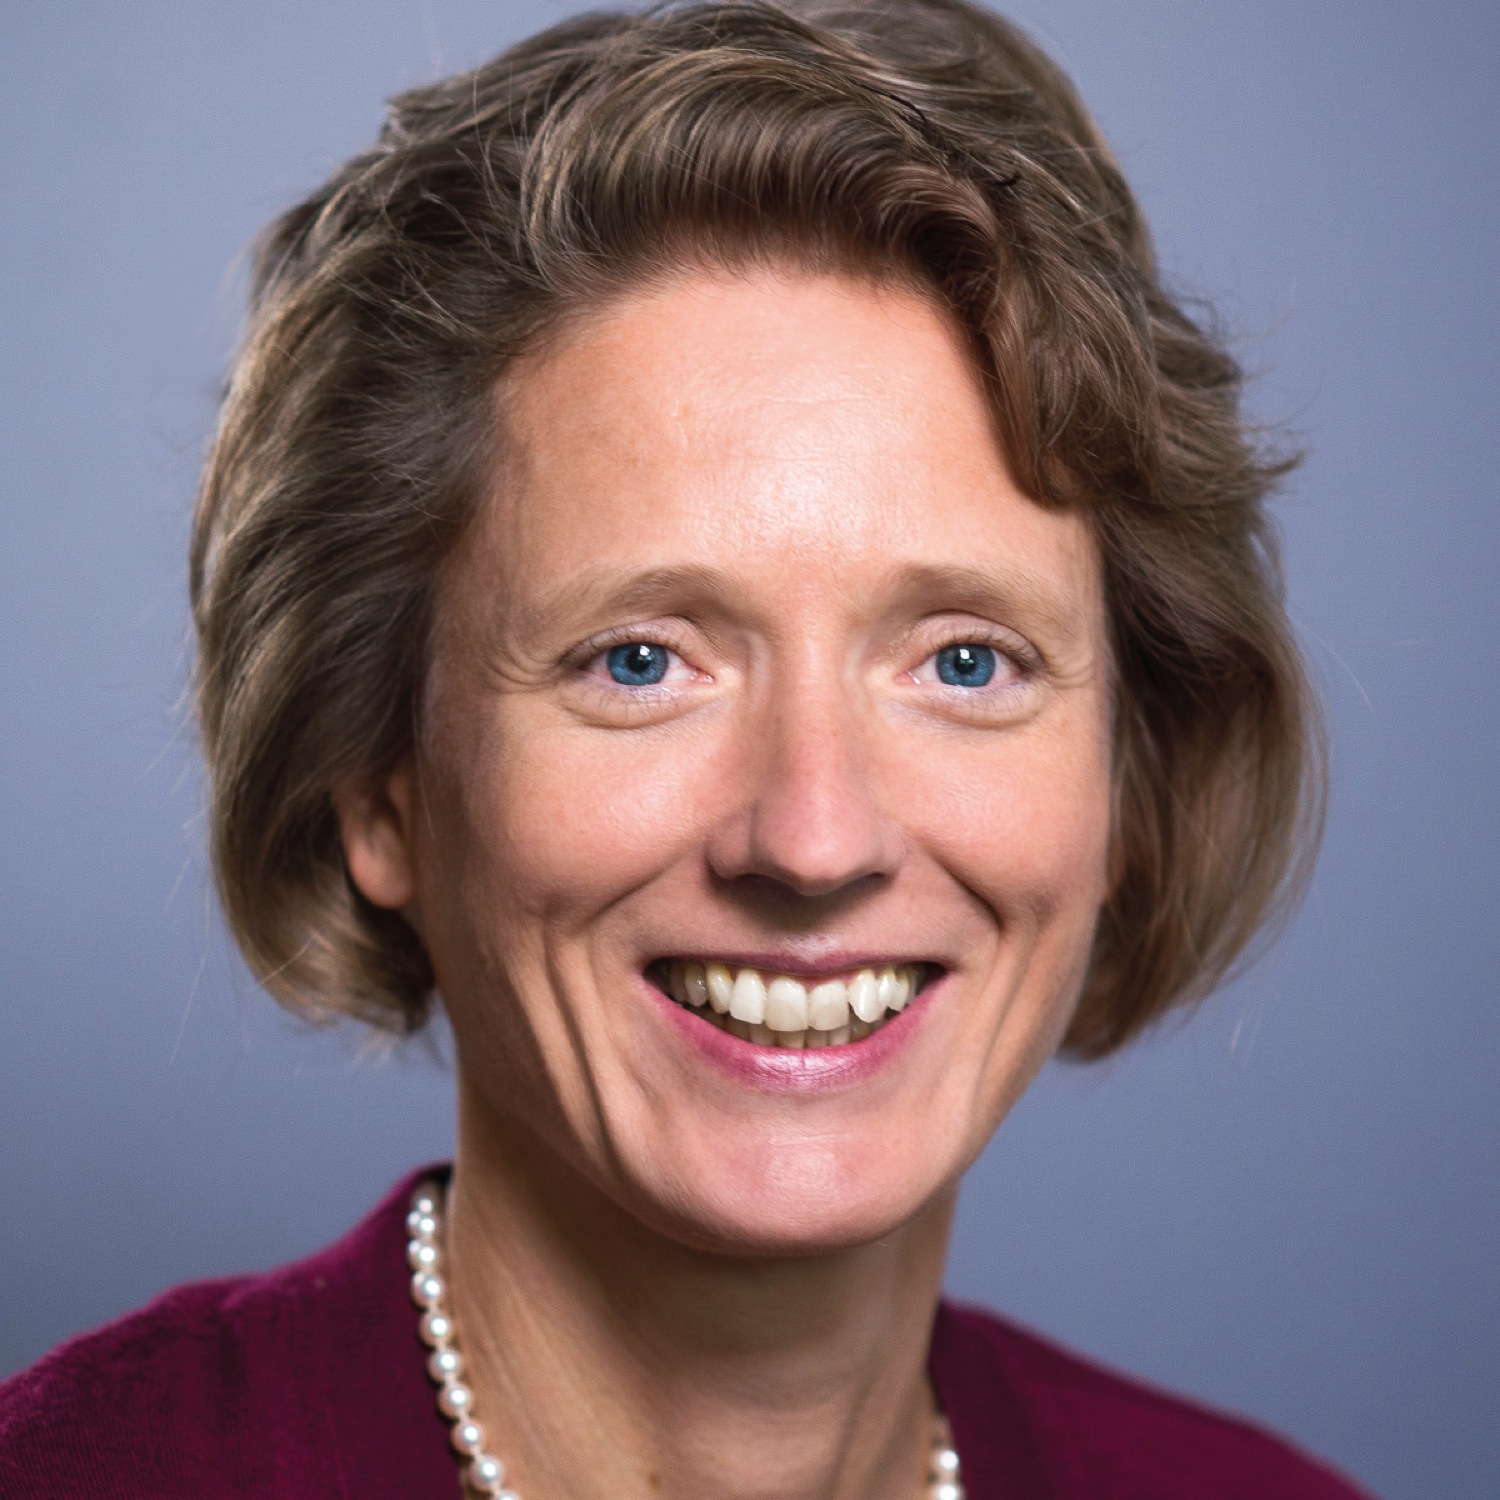 Martina Schmidt, Ph.D.